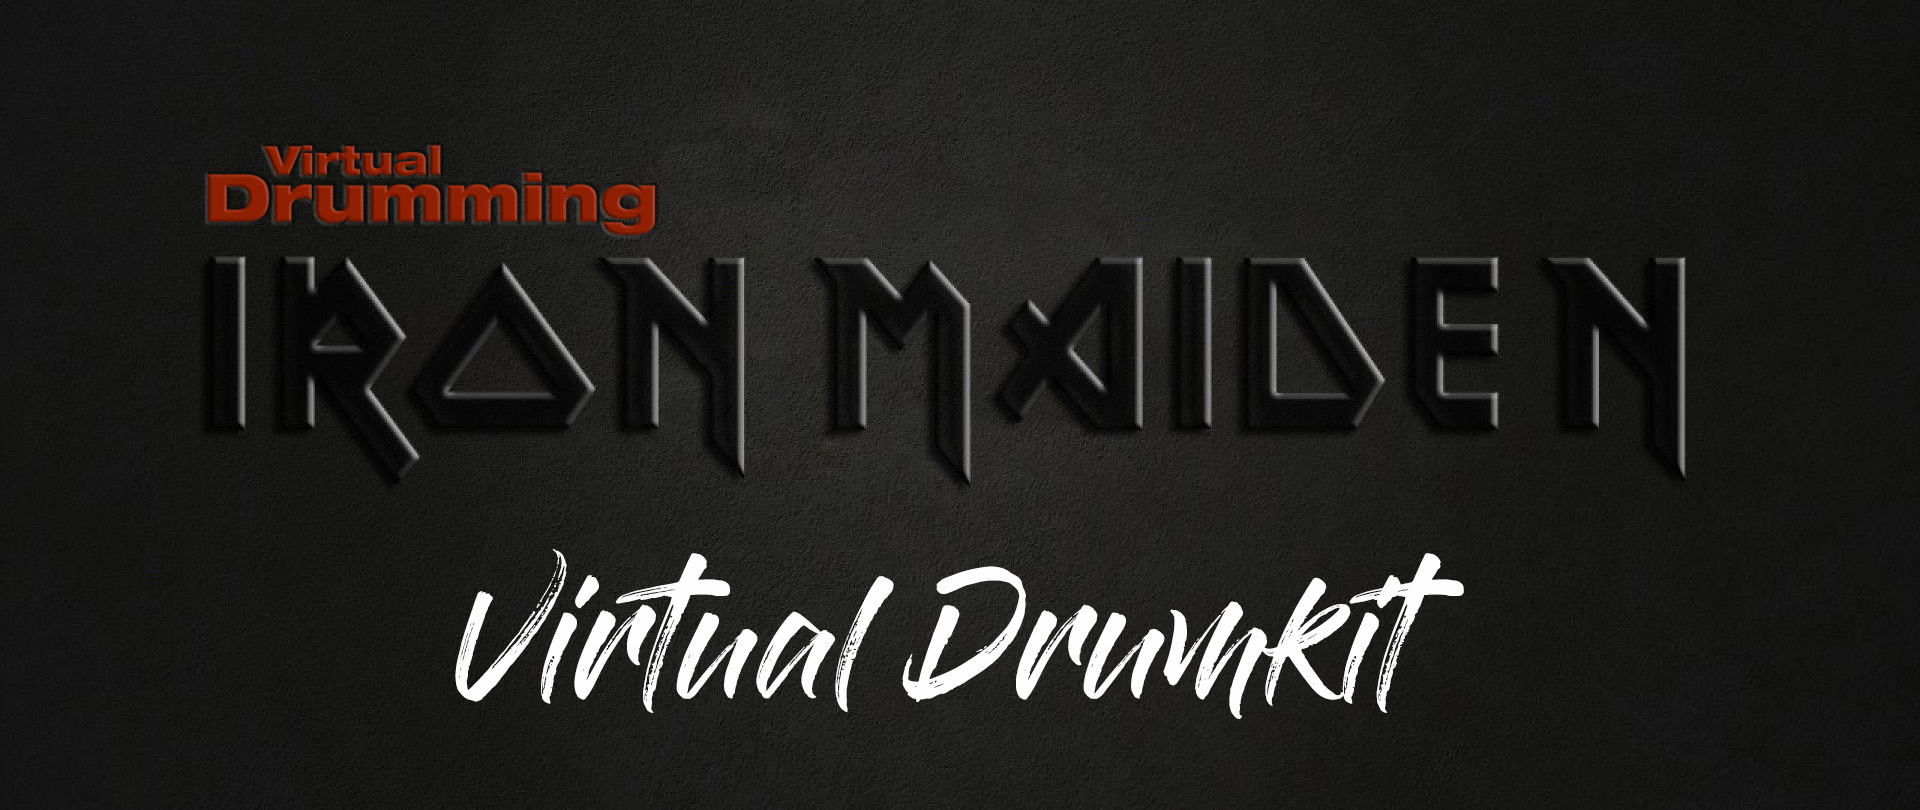 Virtual Drumming presents Iron Maiden - Virtual Drumkit